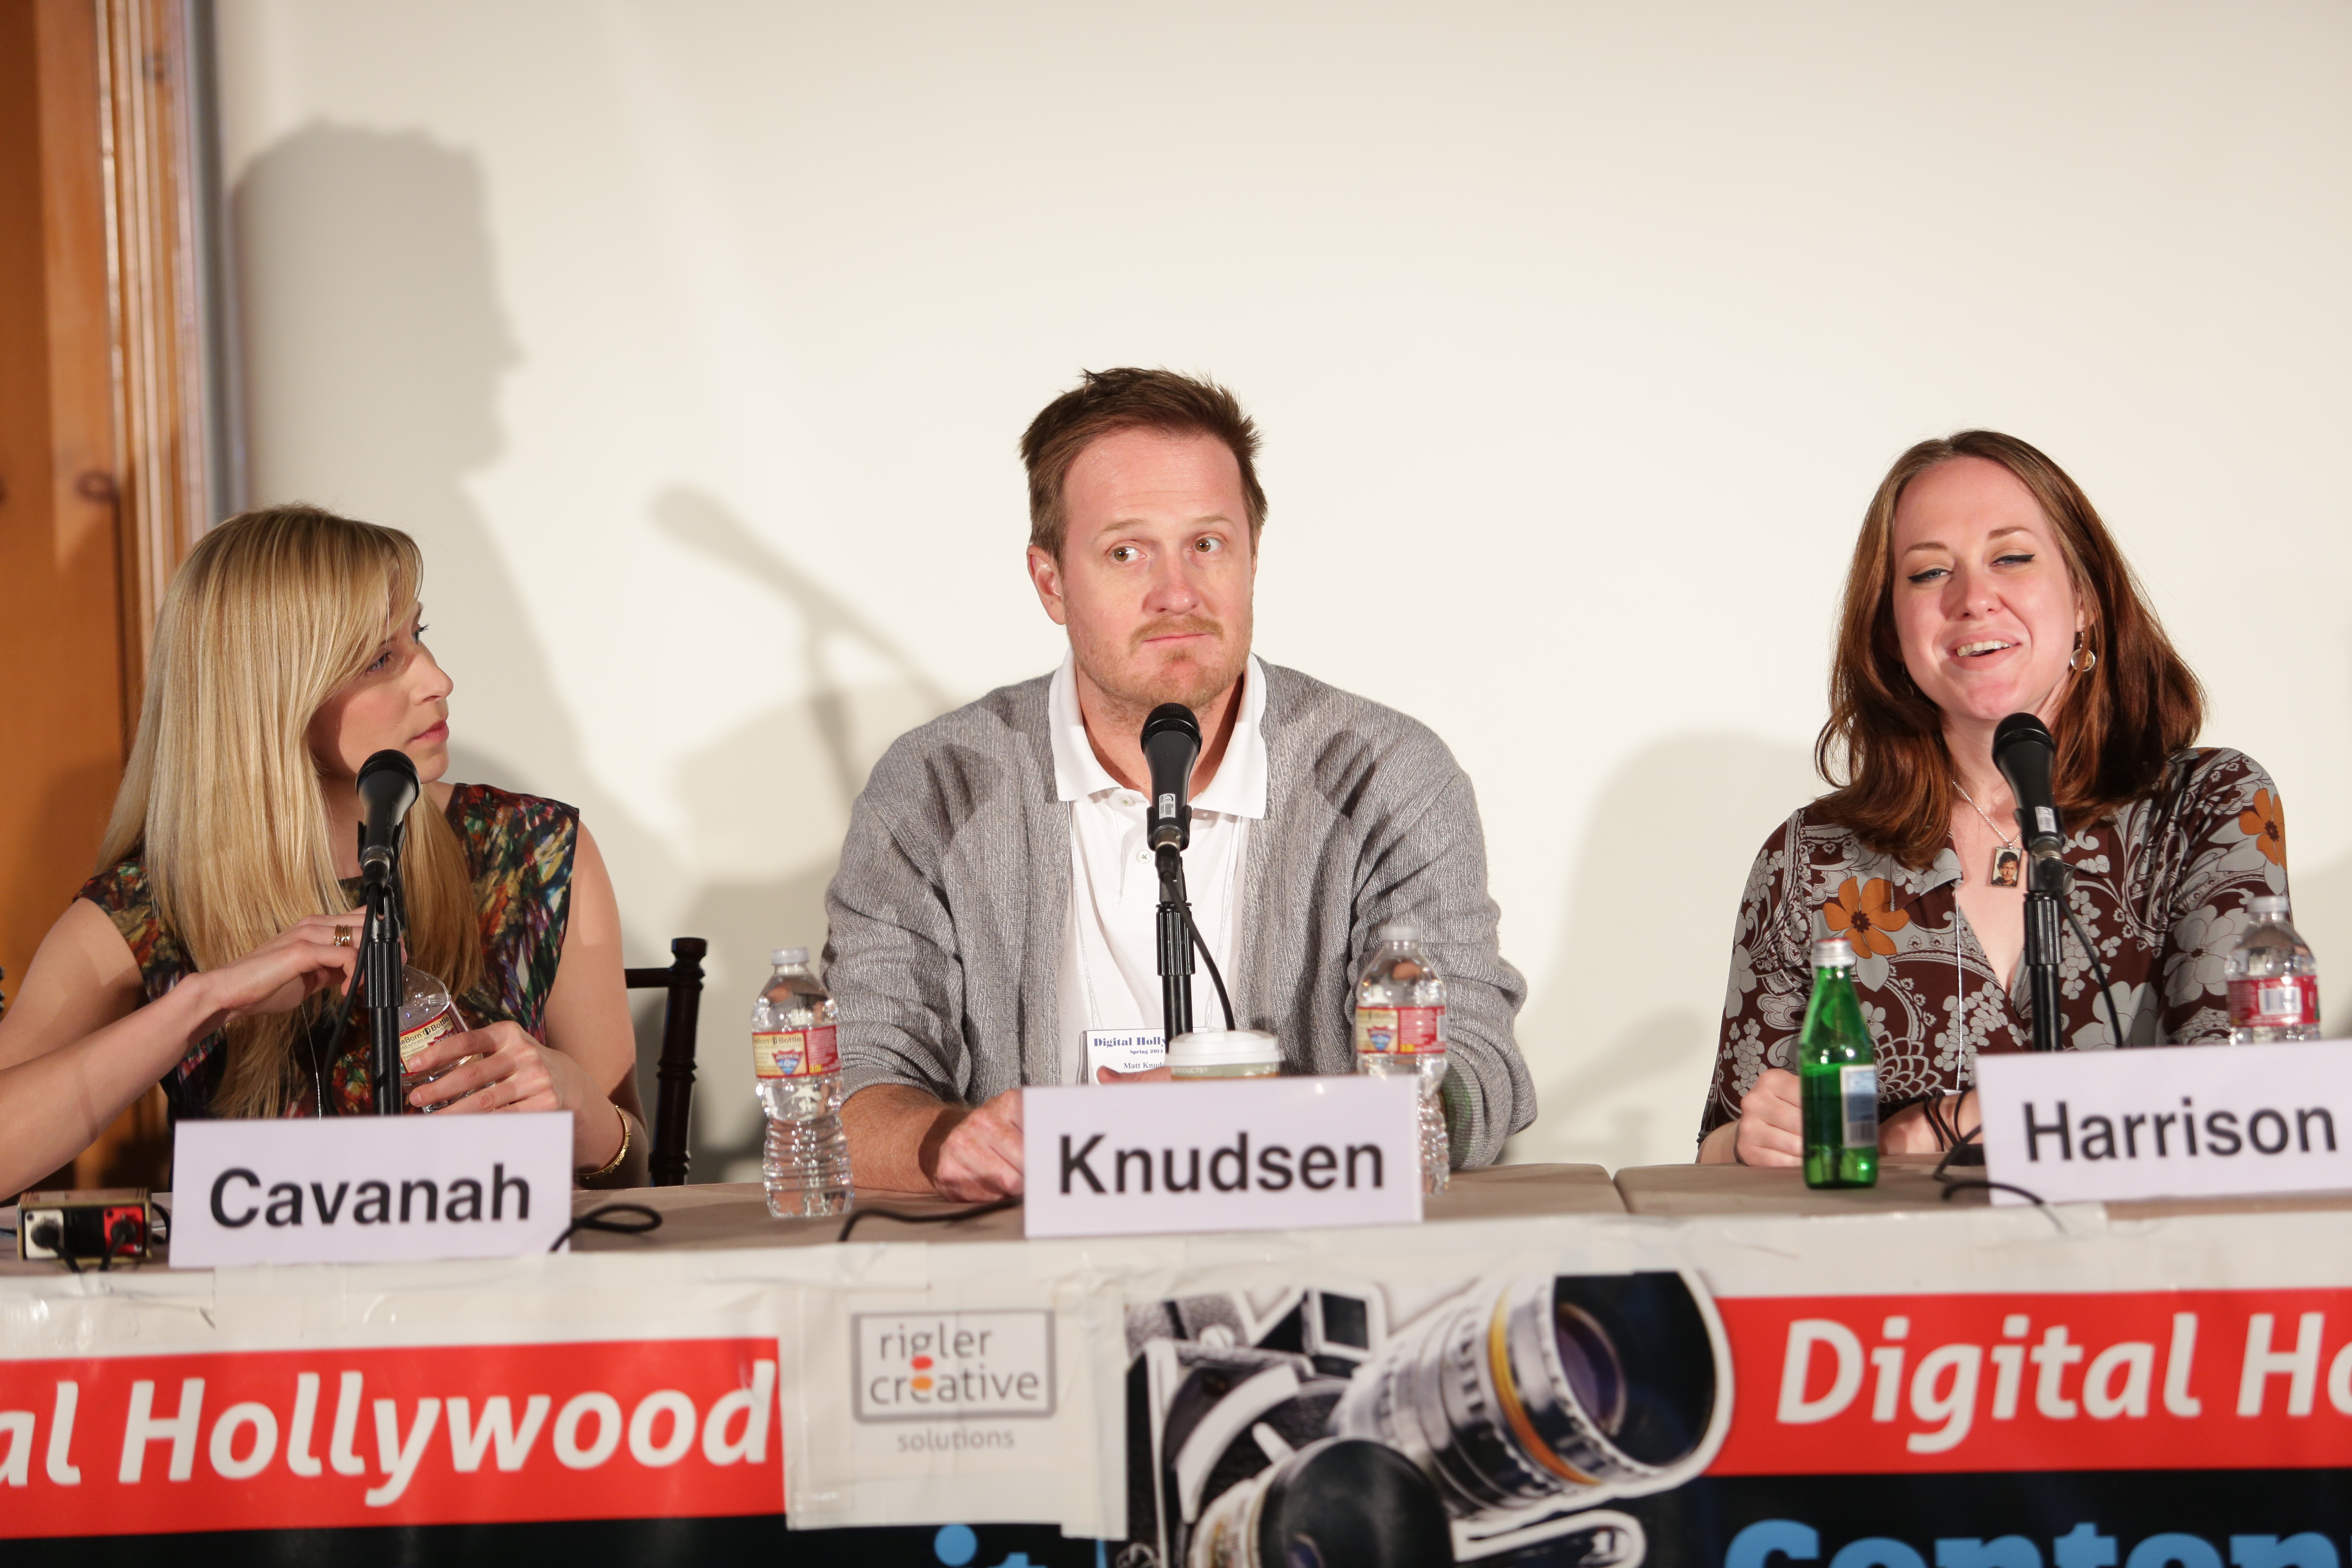 Avery Cavanaugh, Matt Knudsen and Julia Harrison speak at the Digital Hollywood Conference